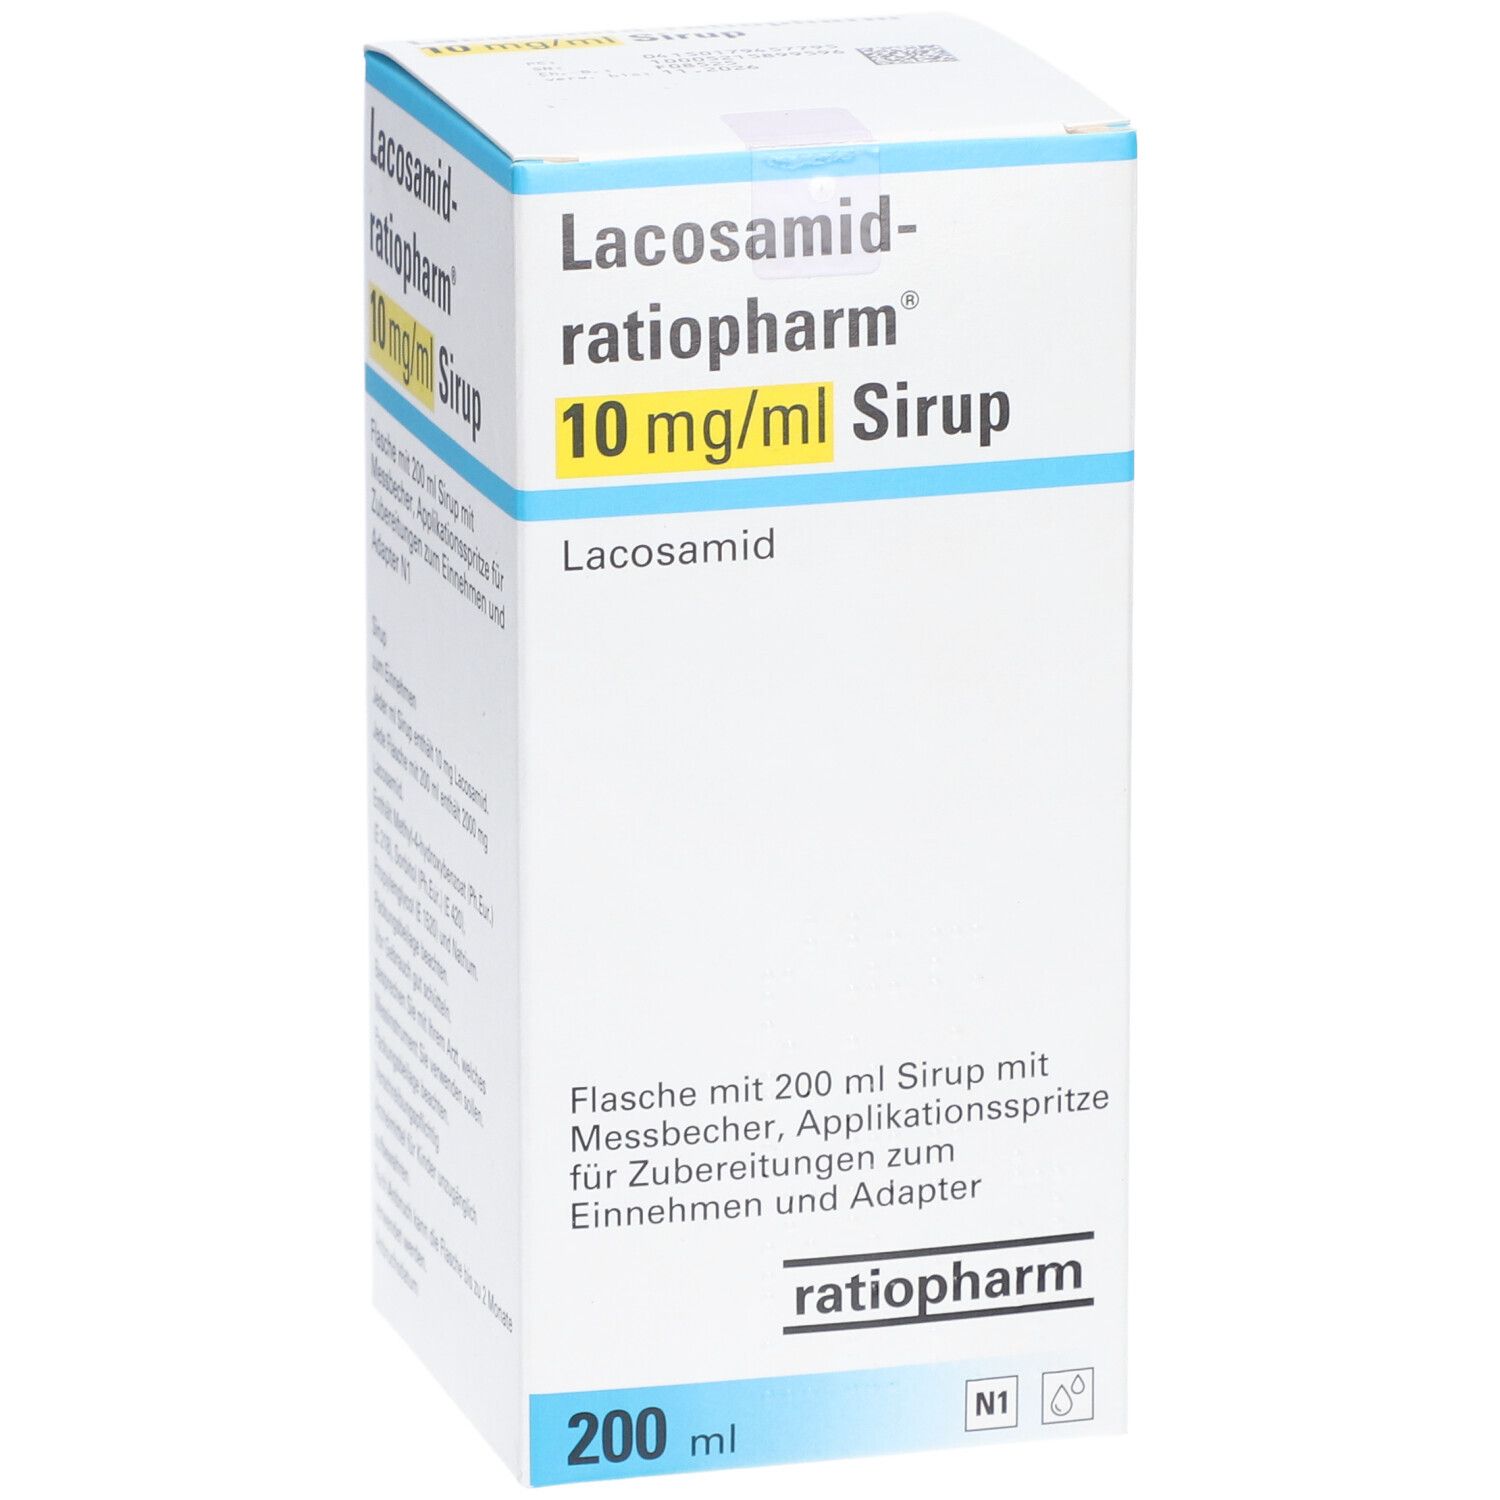 Lacosamid-ratiopharm® 10 mg/ml